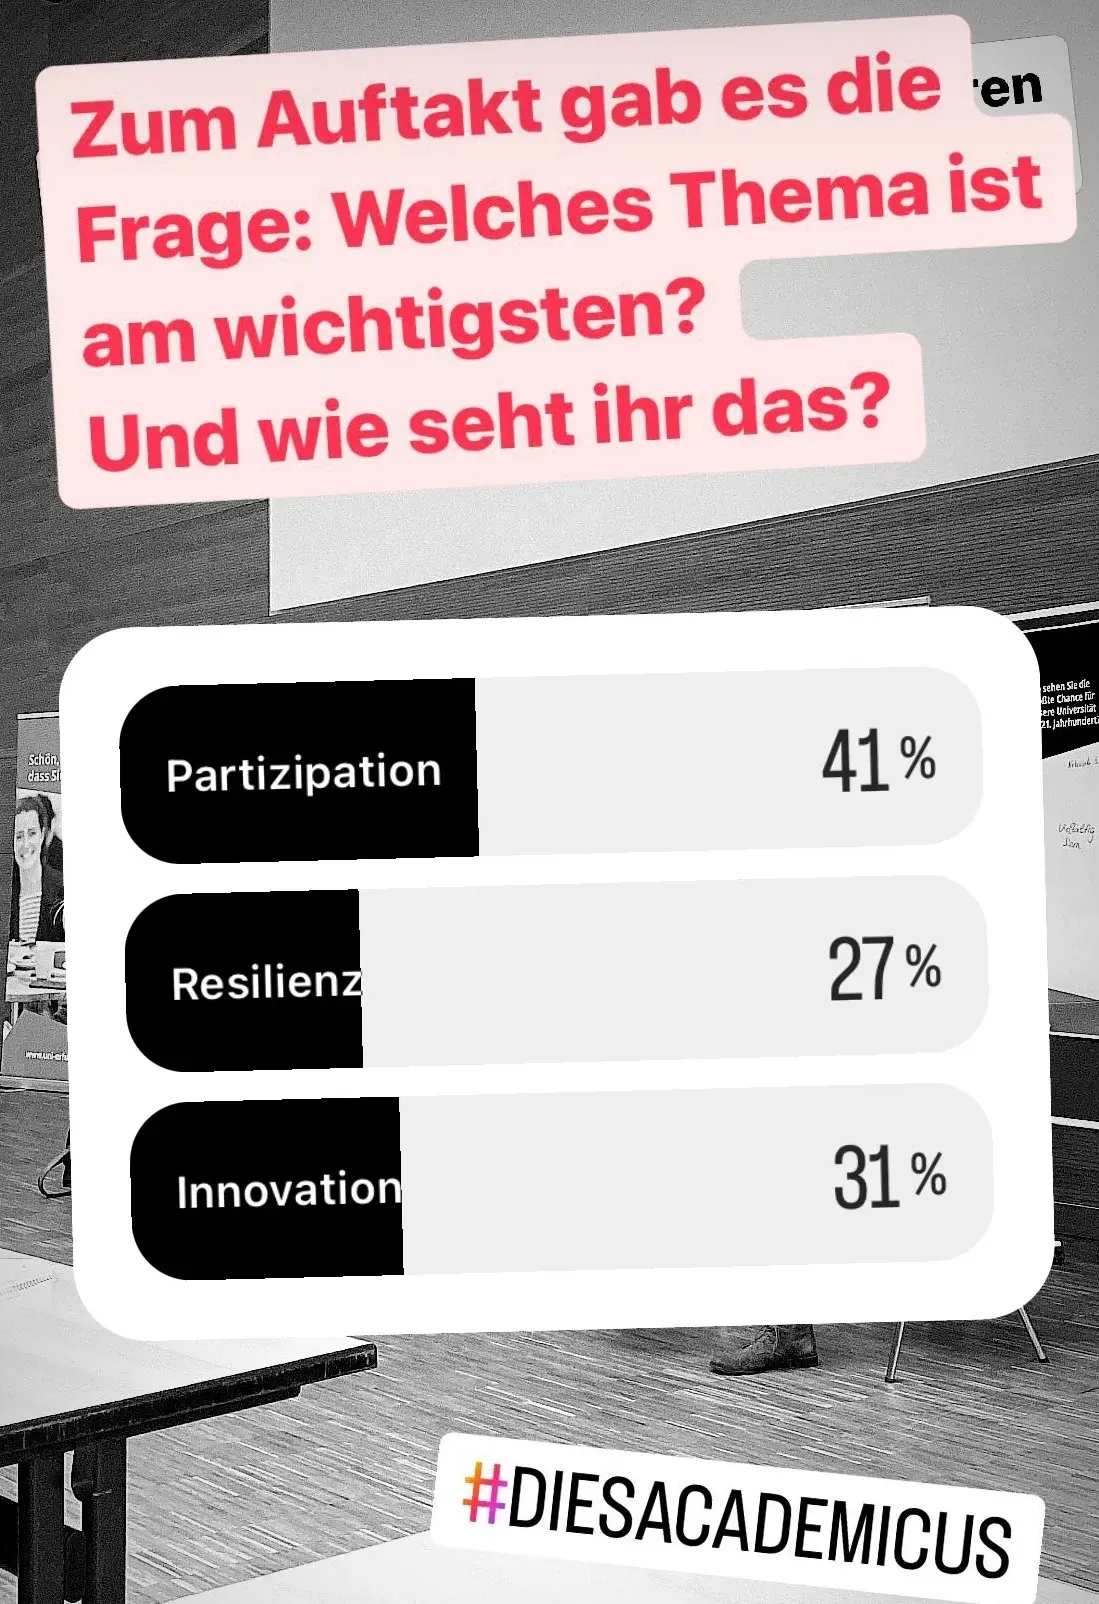 Instagram survey screenshot